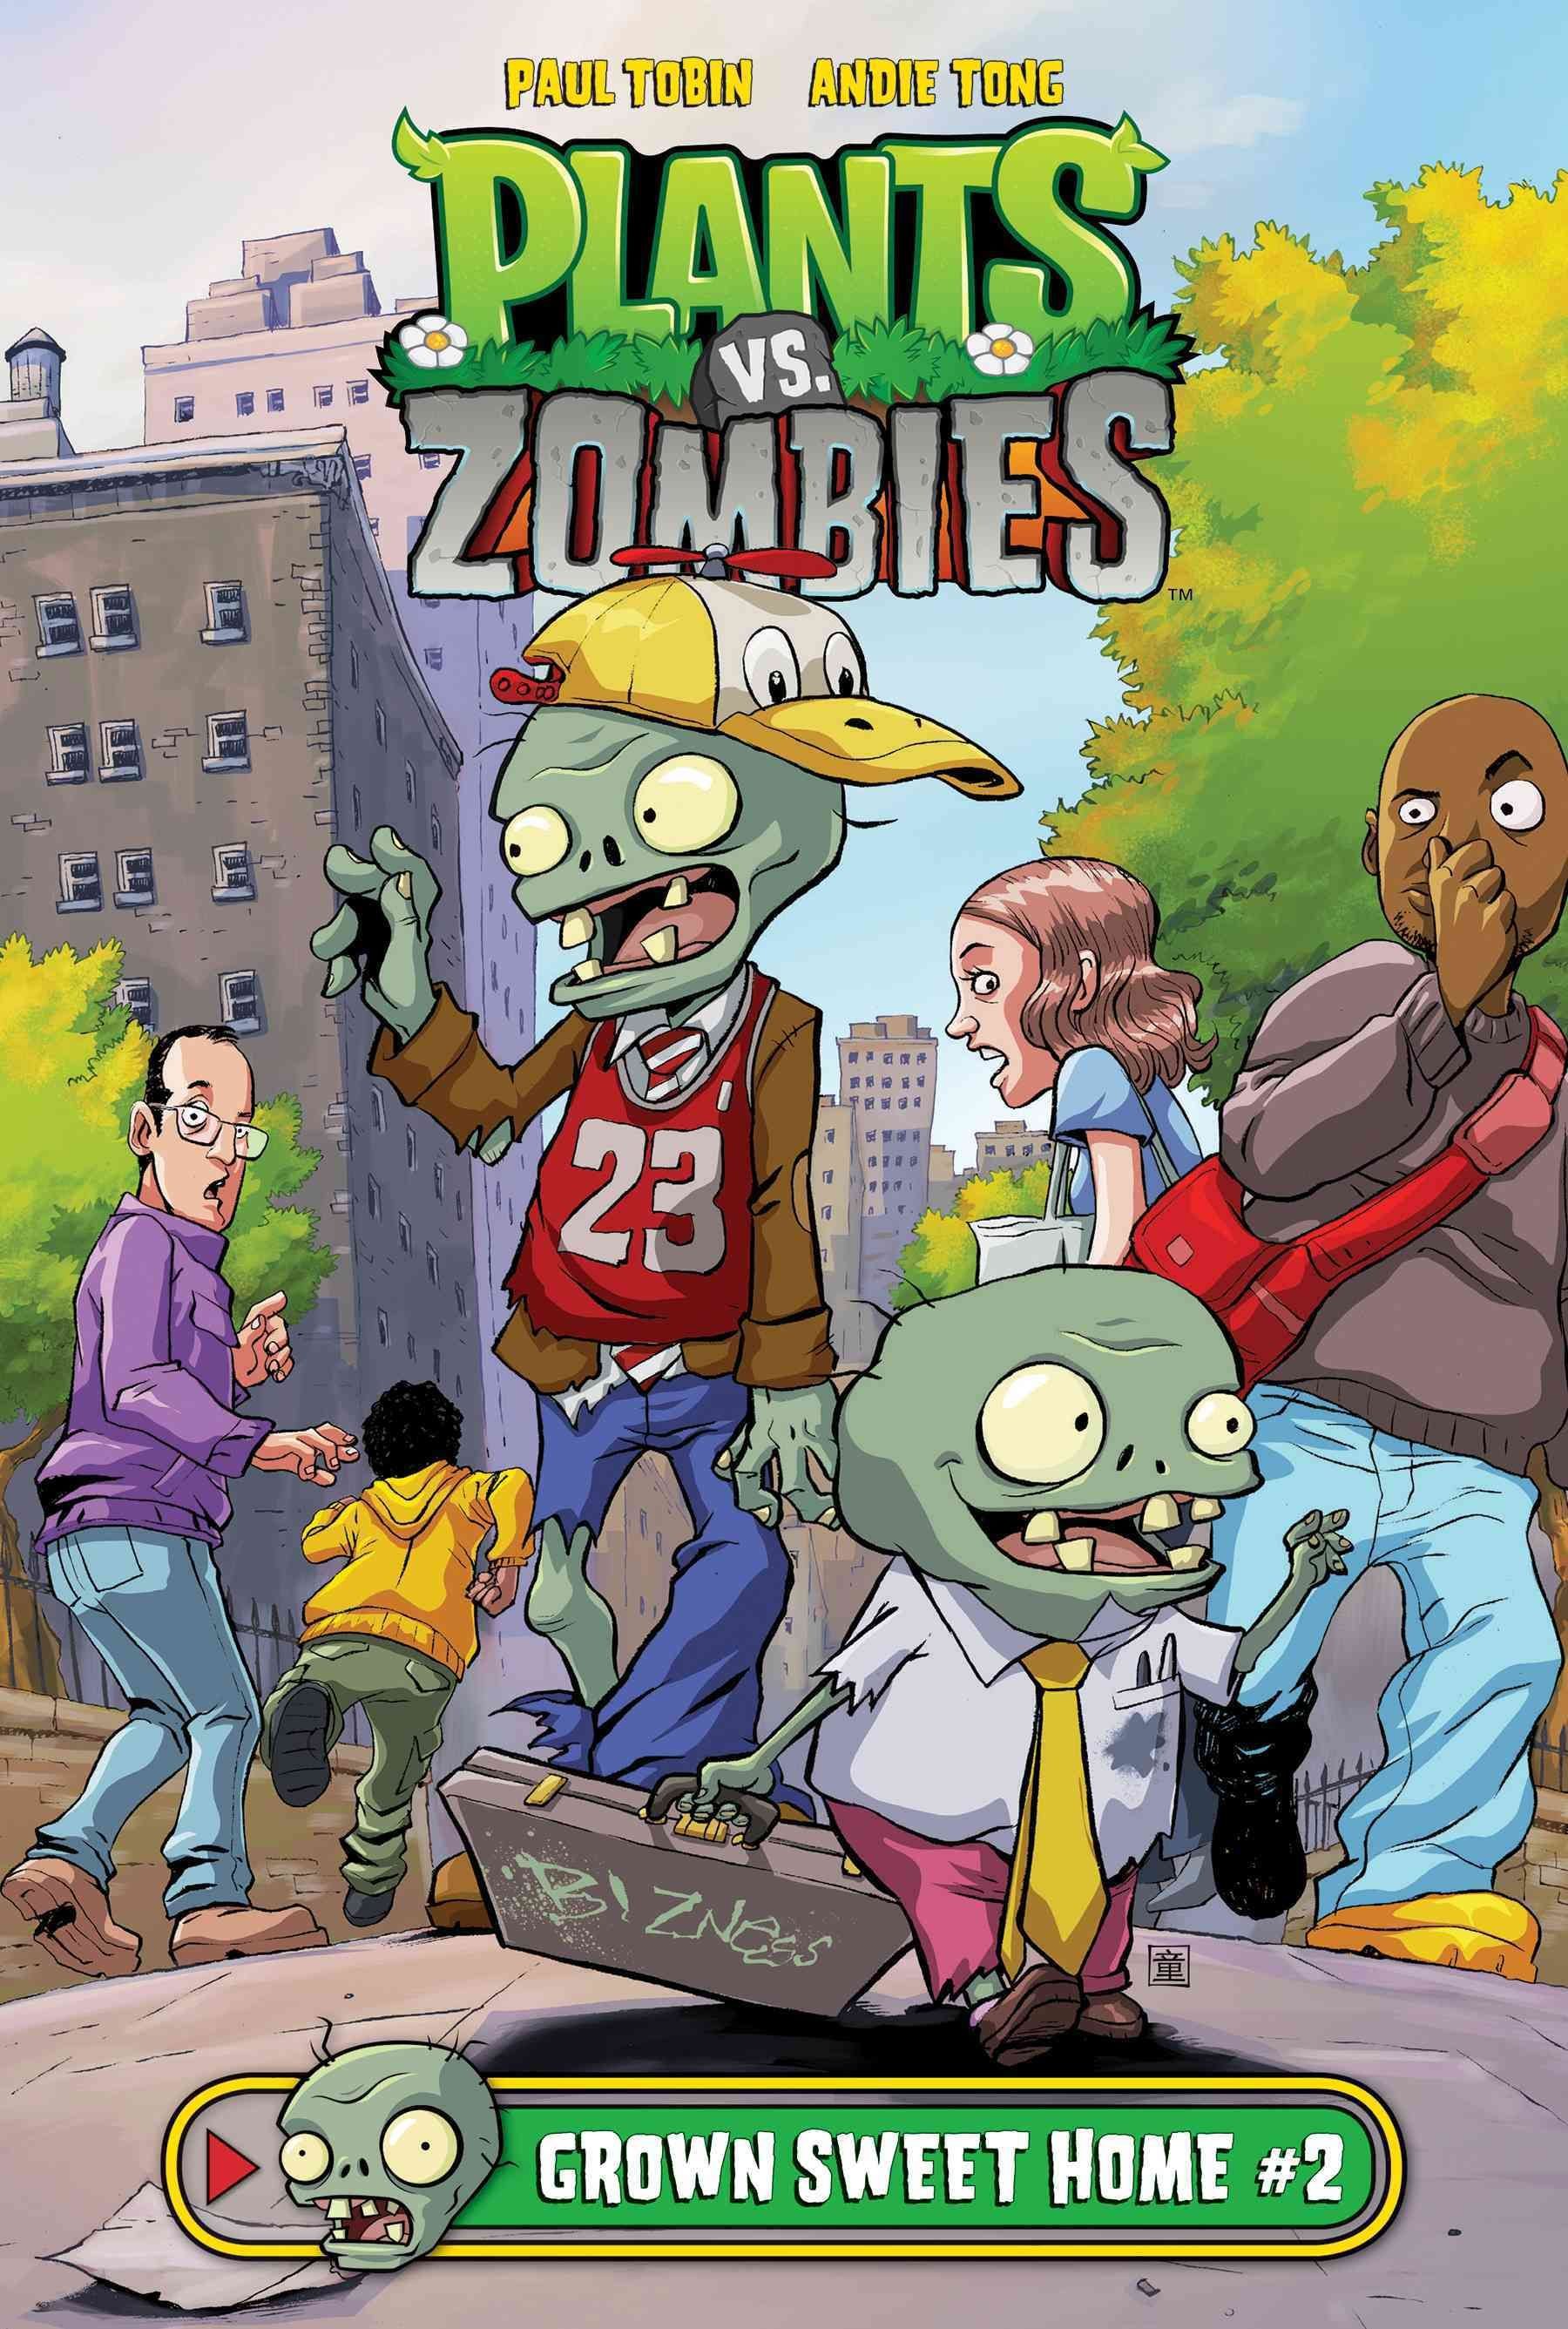 Plants vs. Zombies Volume 18: Constructionary Tales by Paul Tobin